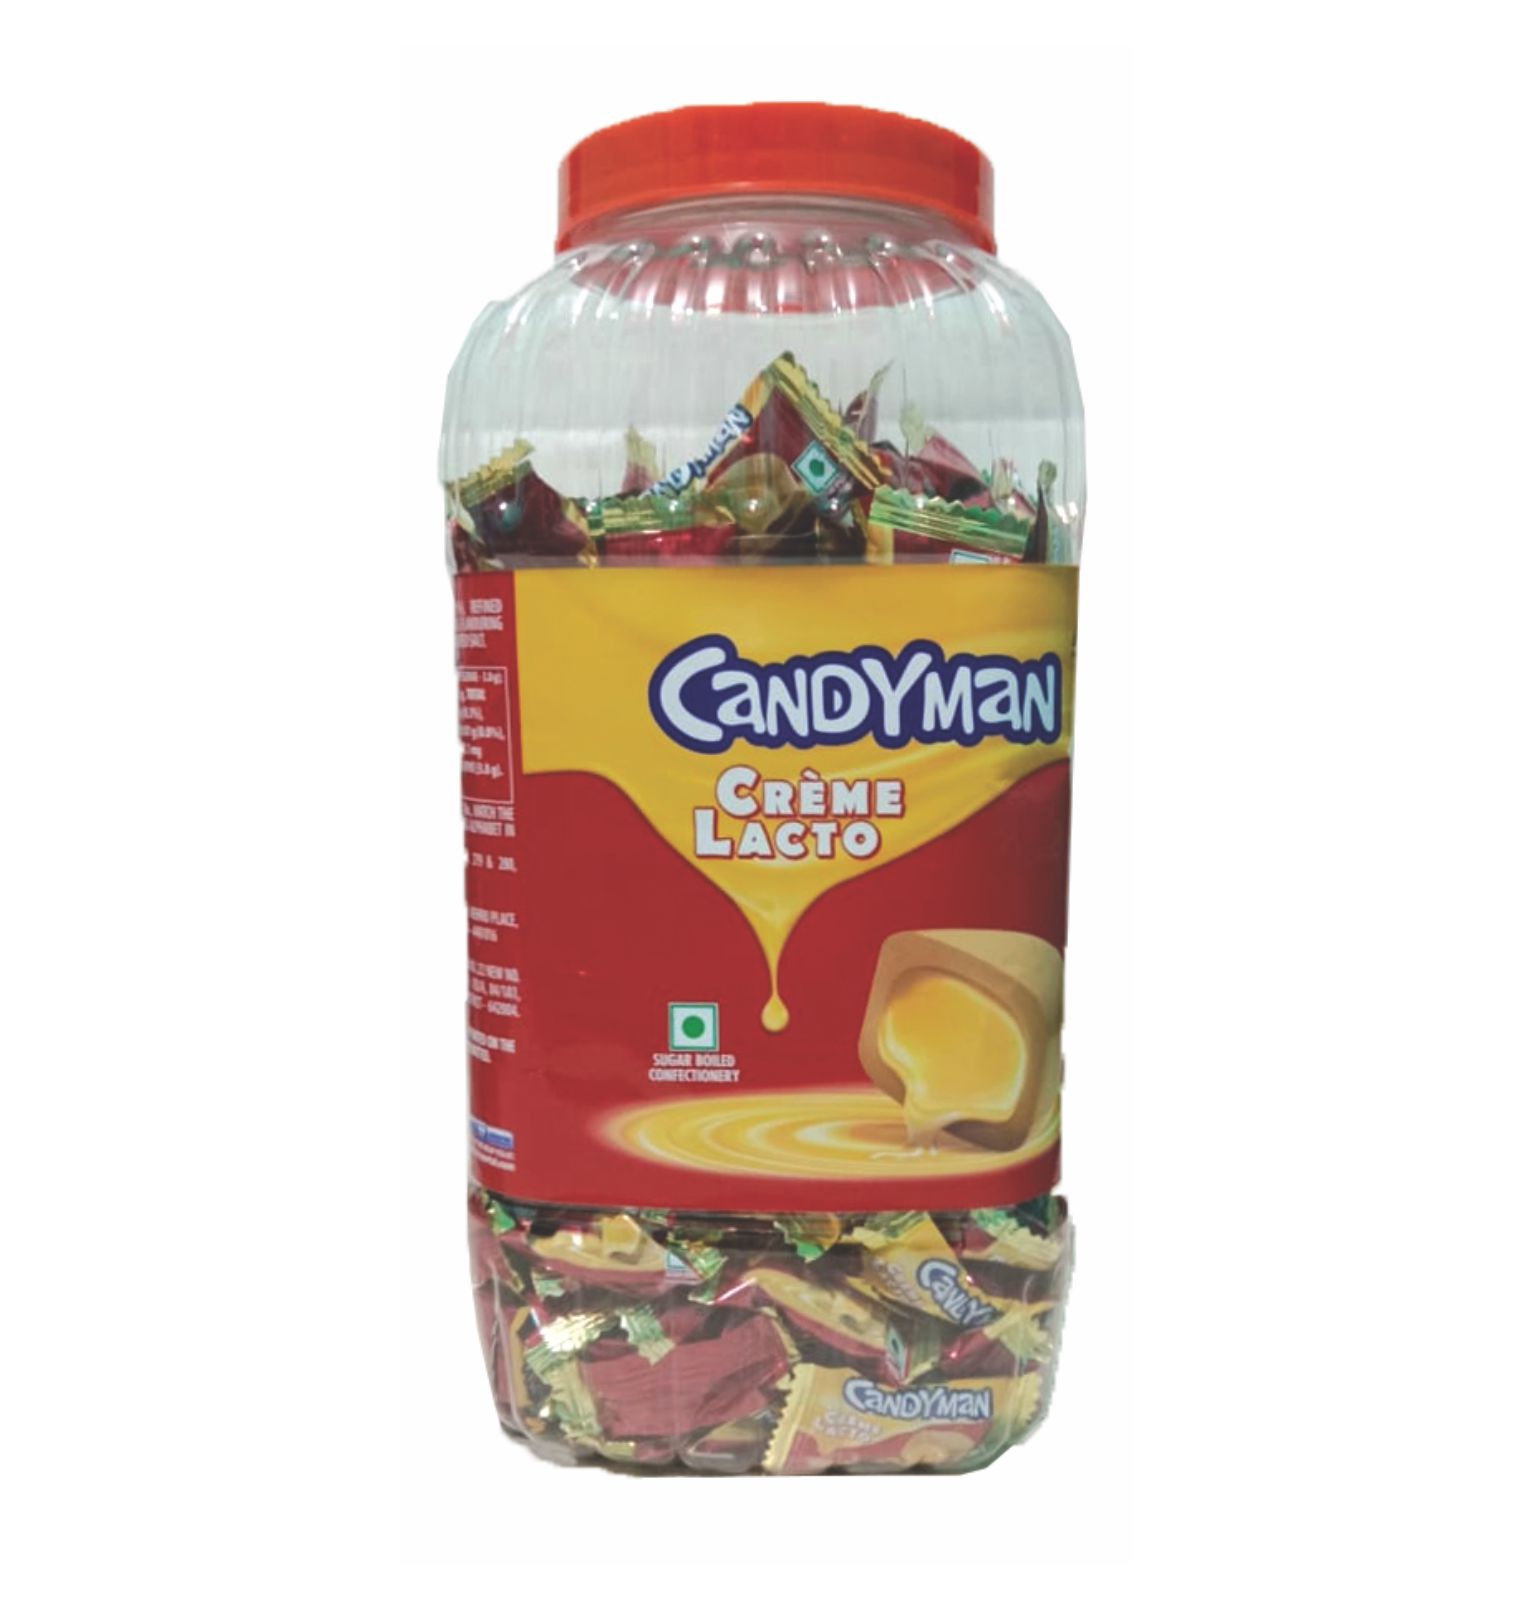 Candyman Cream Lacto Jar-855g